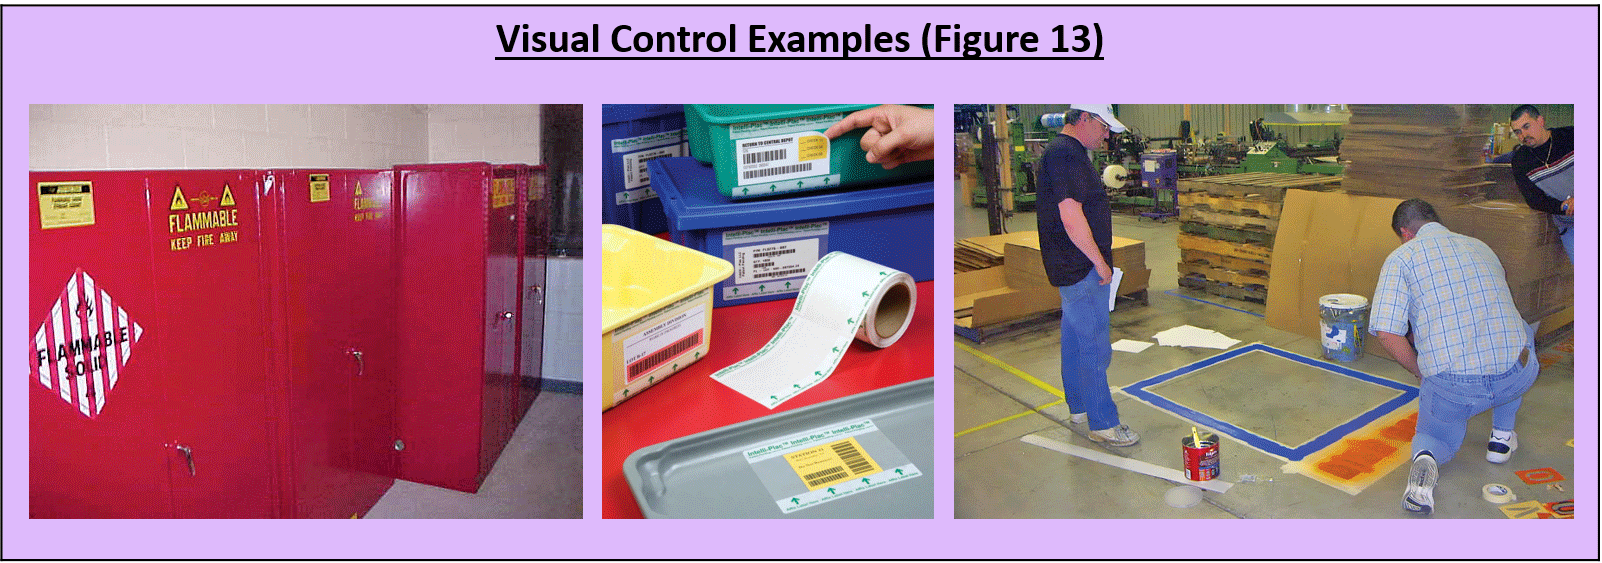 Visual Control Examples (Figure 13)